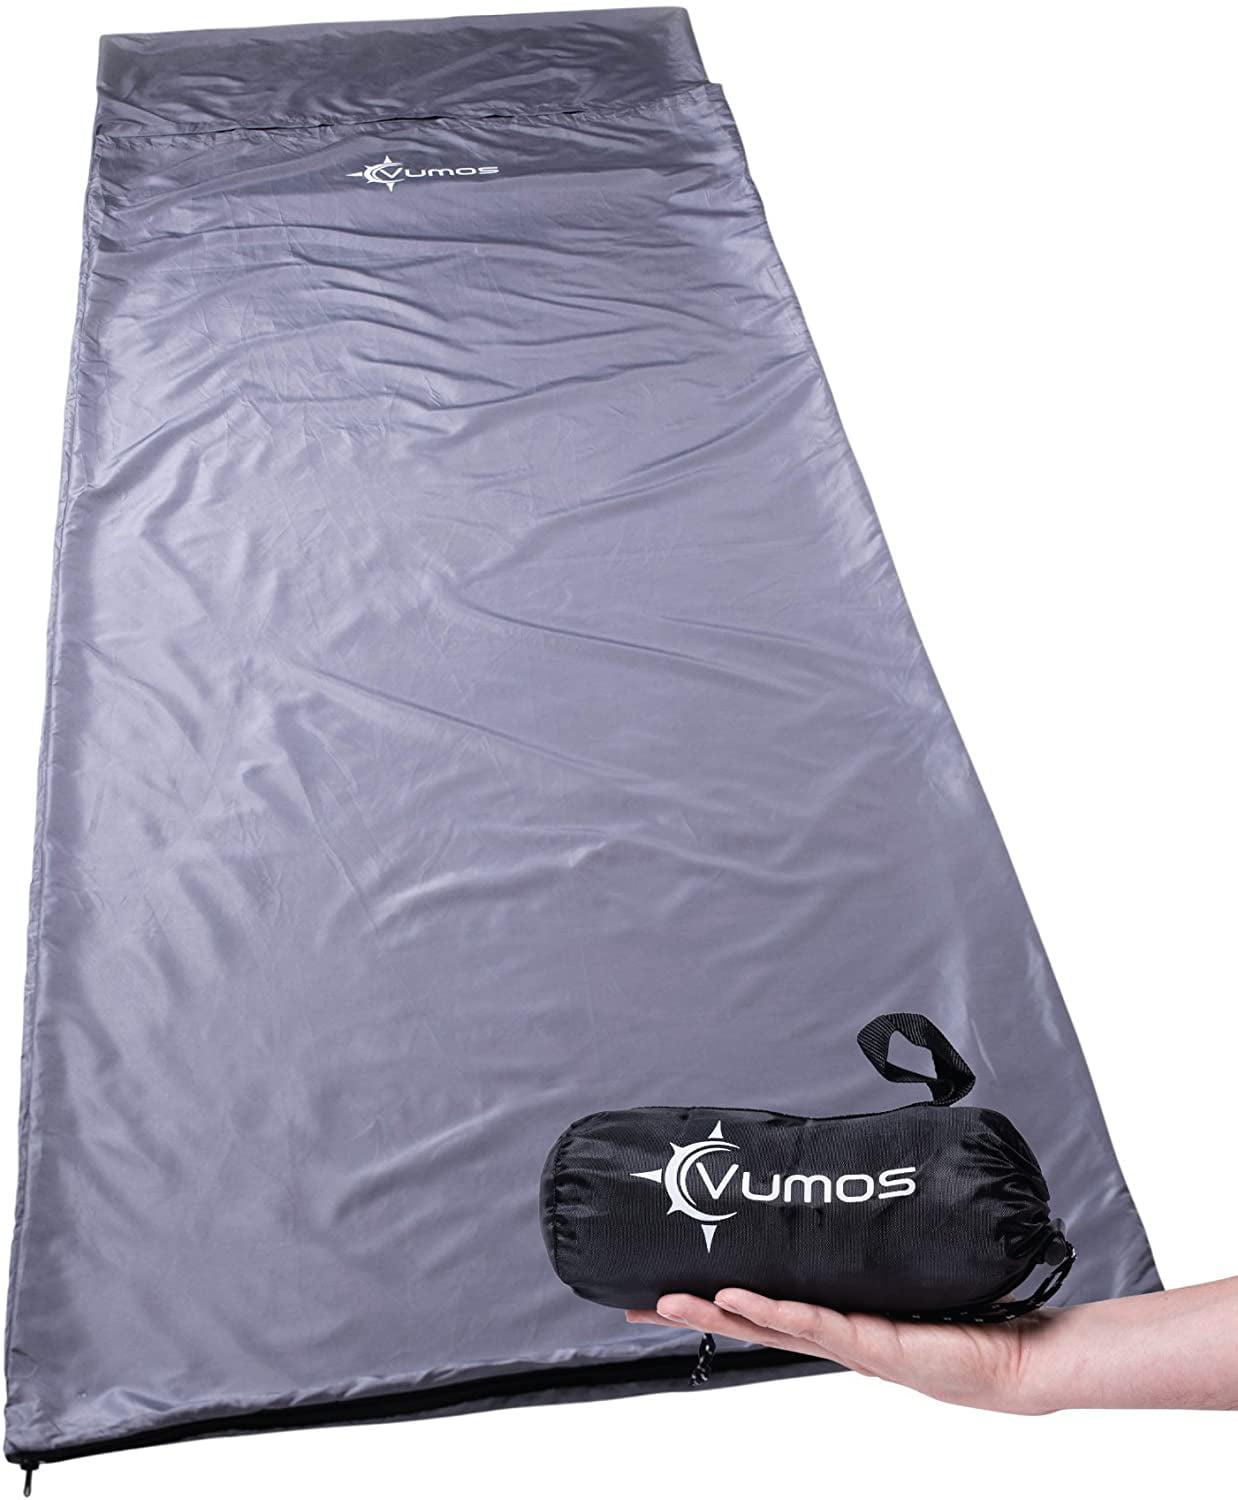 6.9x2.3 ft Sleeping Bag Liner Travel Sleeping Liner Lightweight 